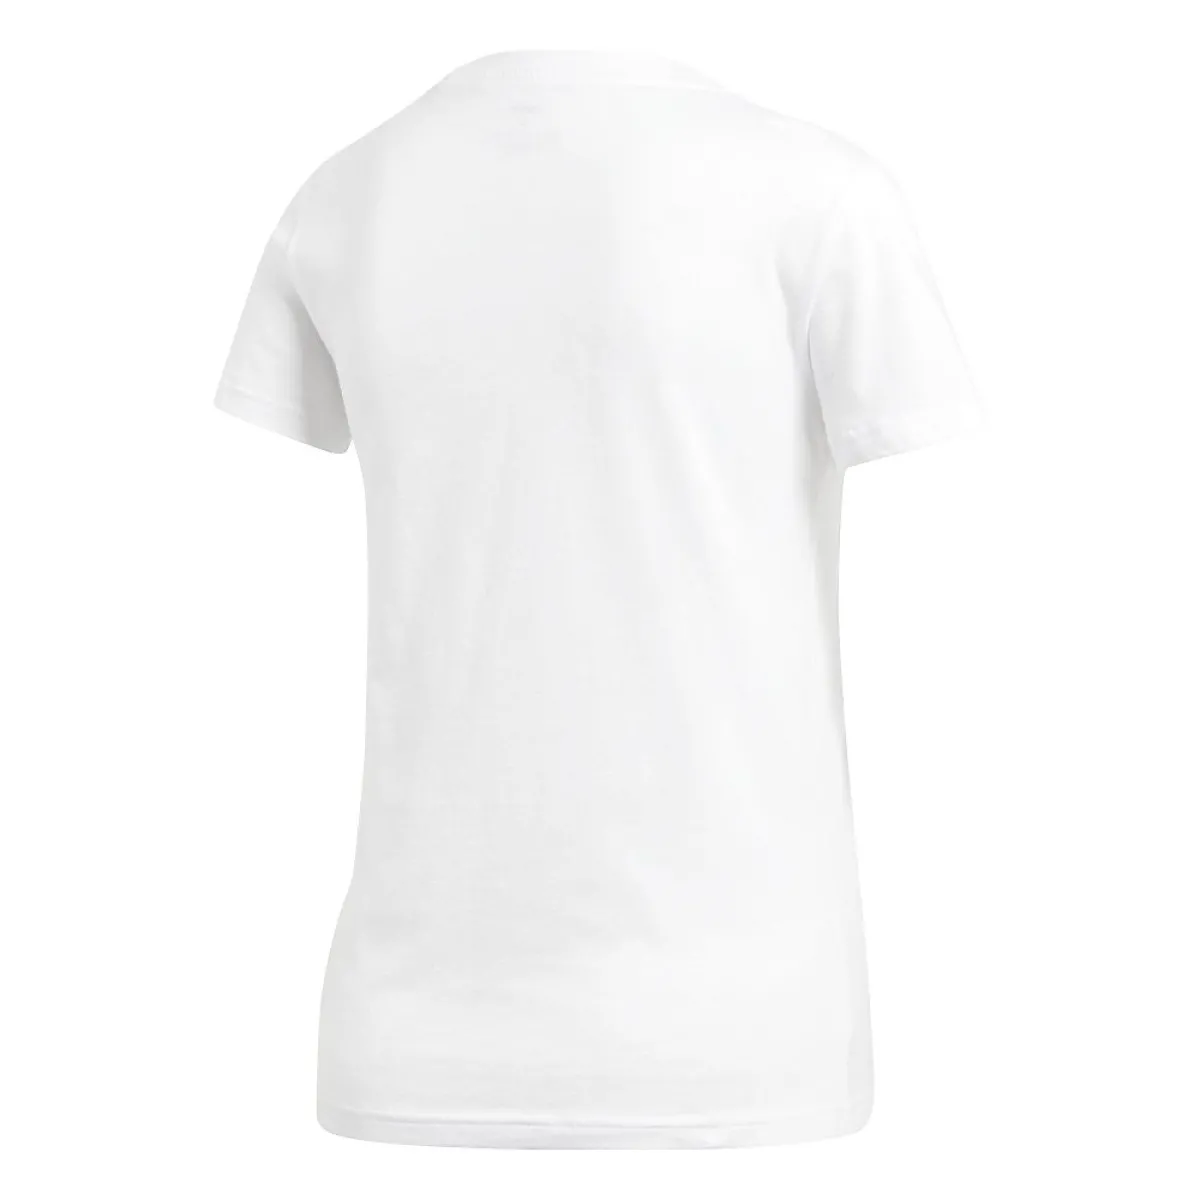 Camiseta adidas Performance Slim Fit Blanco, Mujer